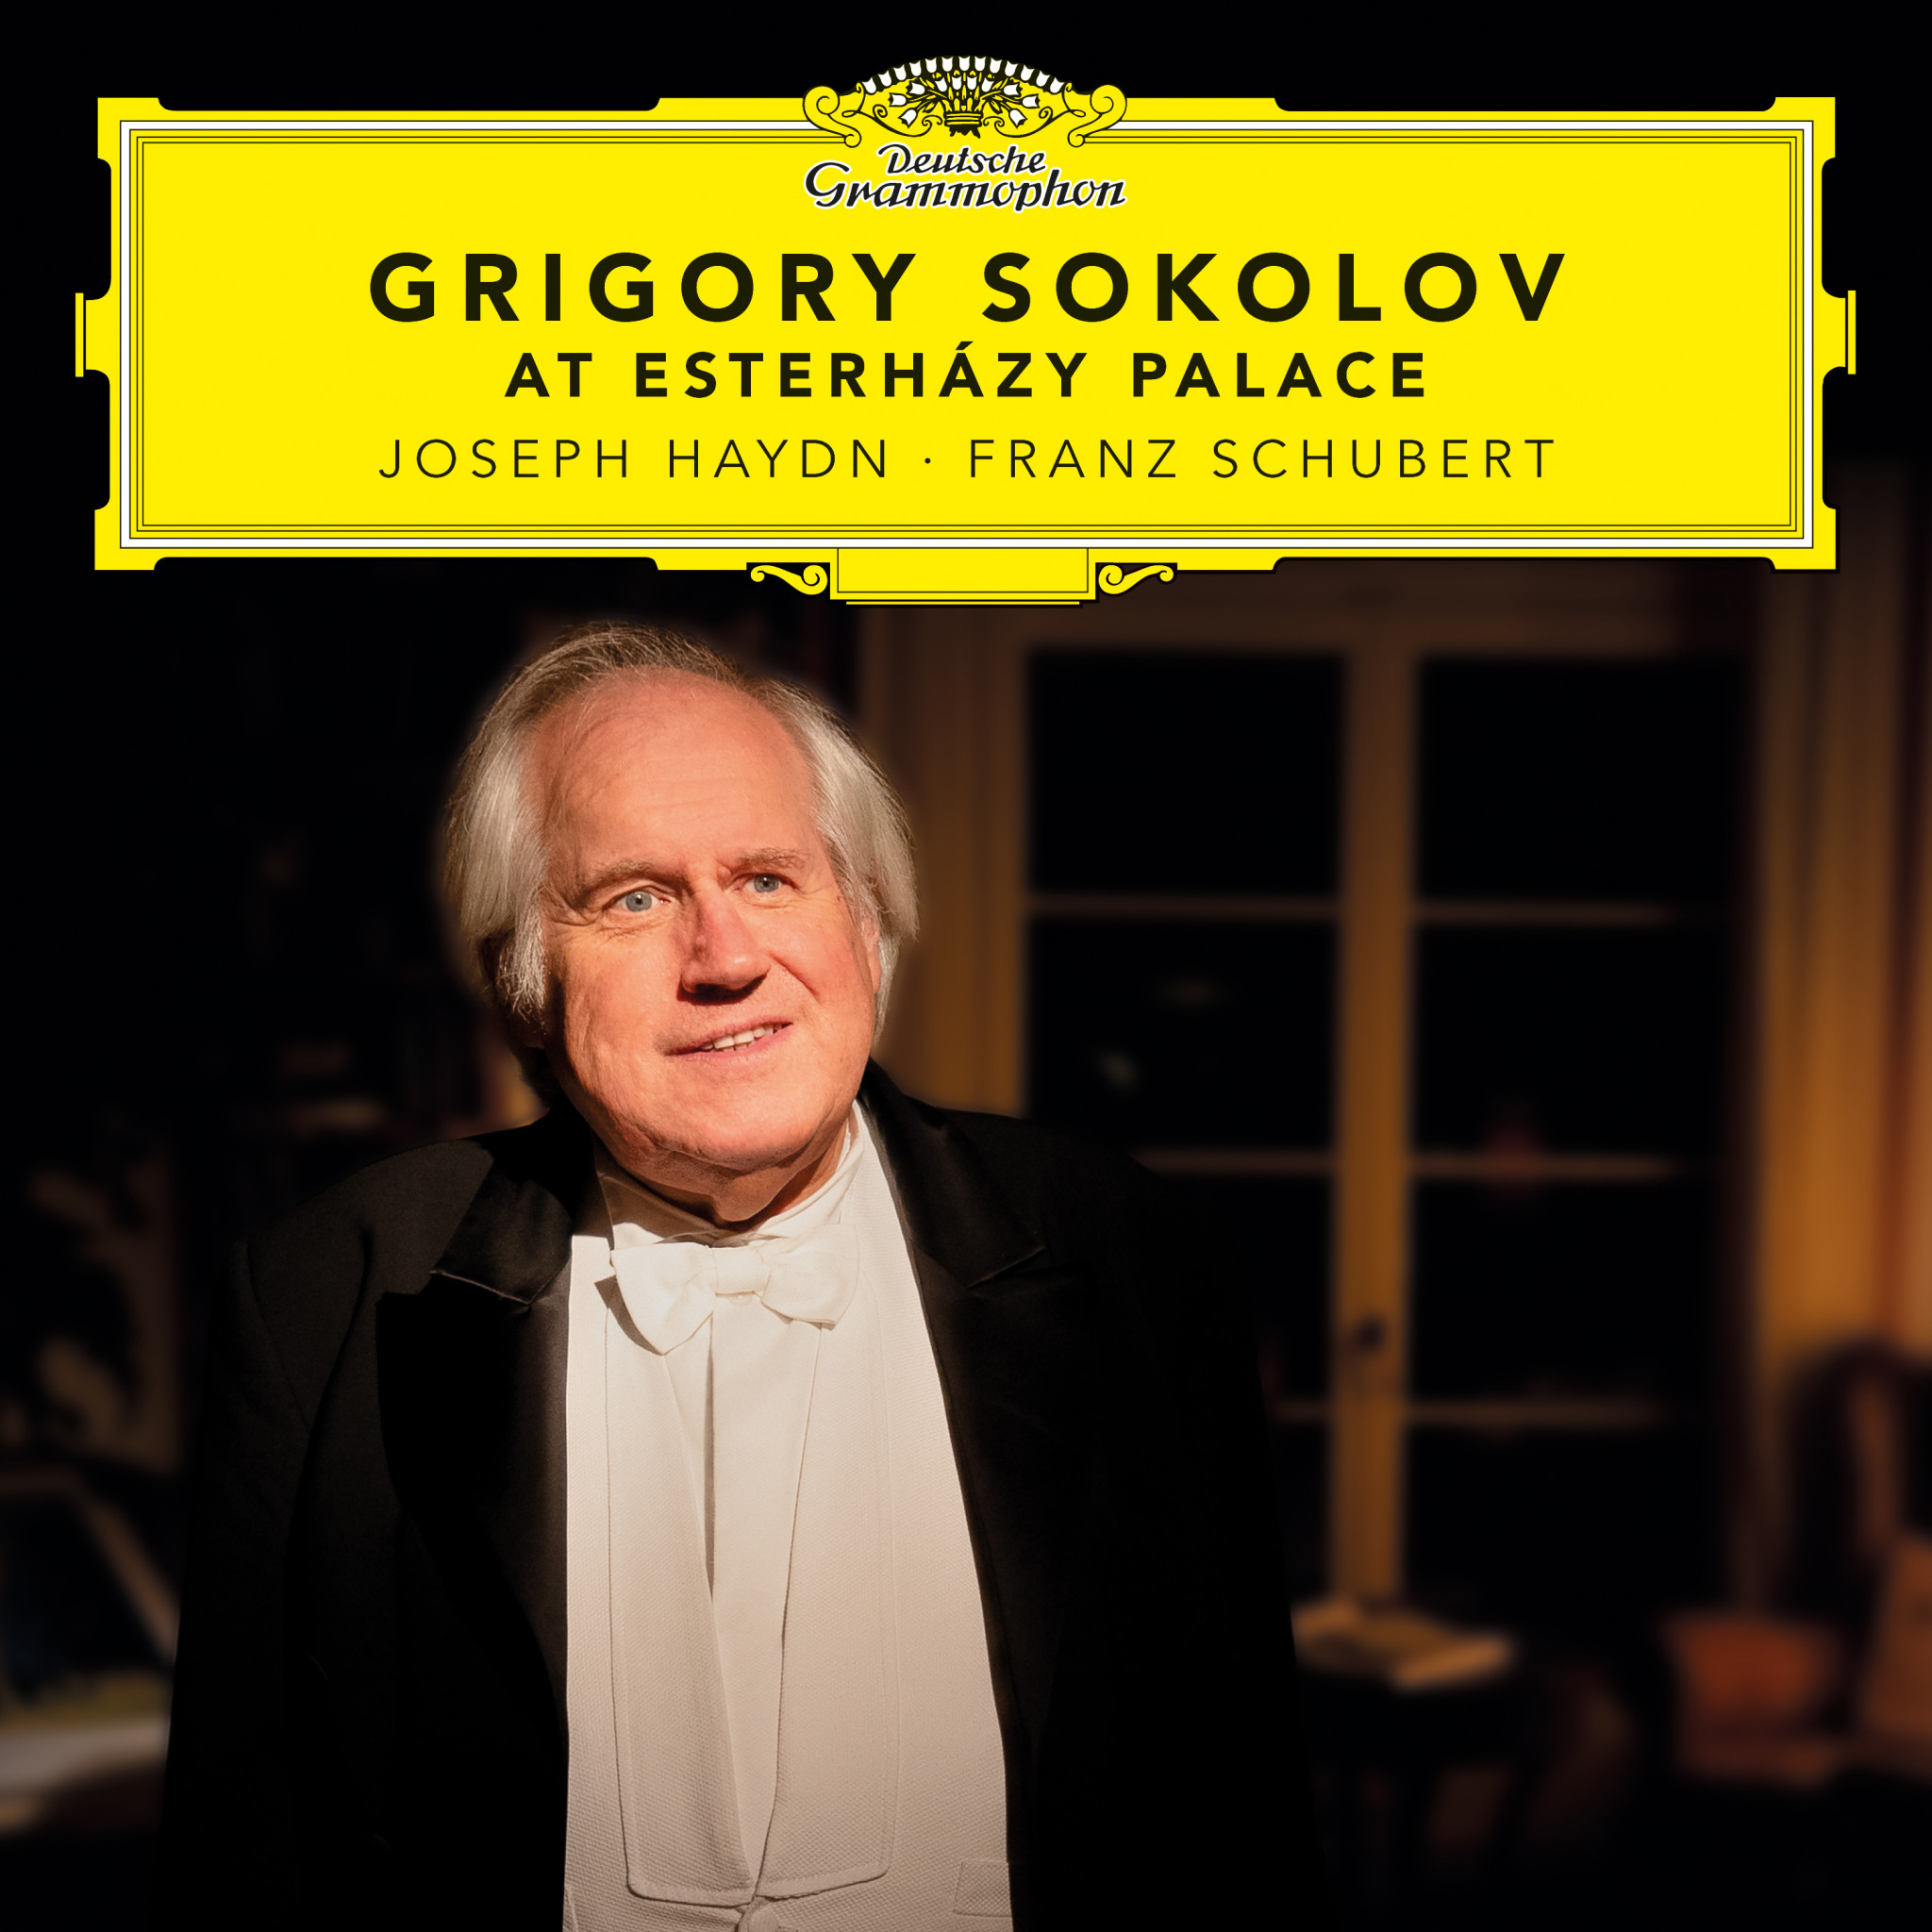 GRIGORY SOKOLOV AT ESTERHÁZY PALACE | Deutsche Grammophon